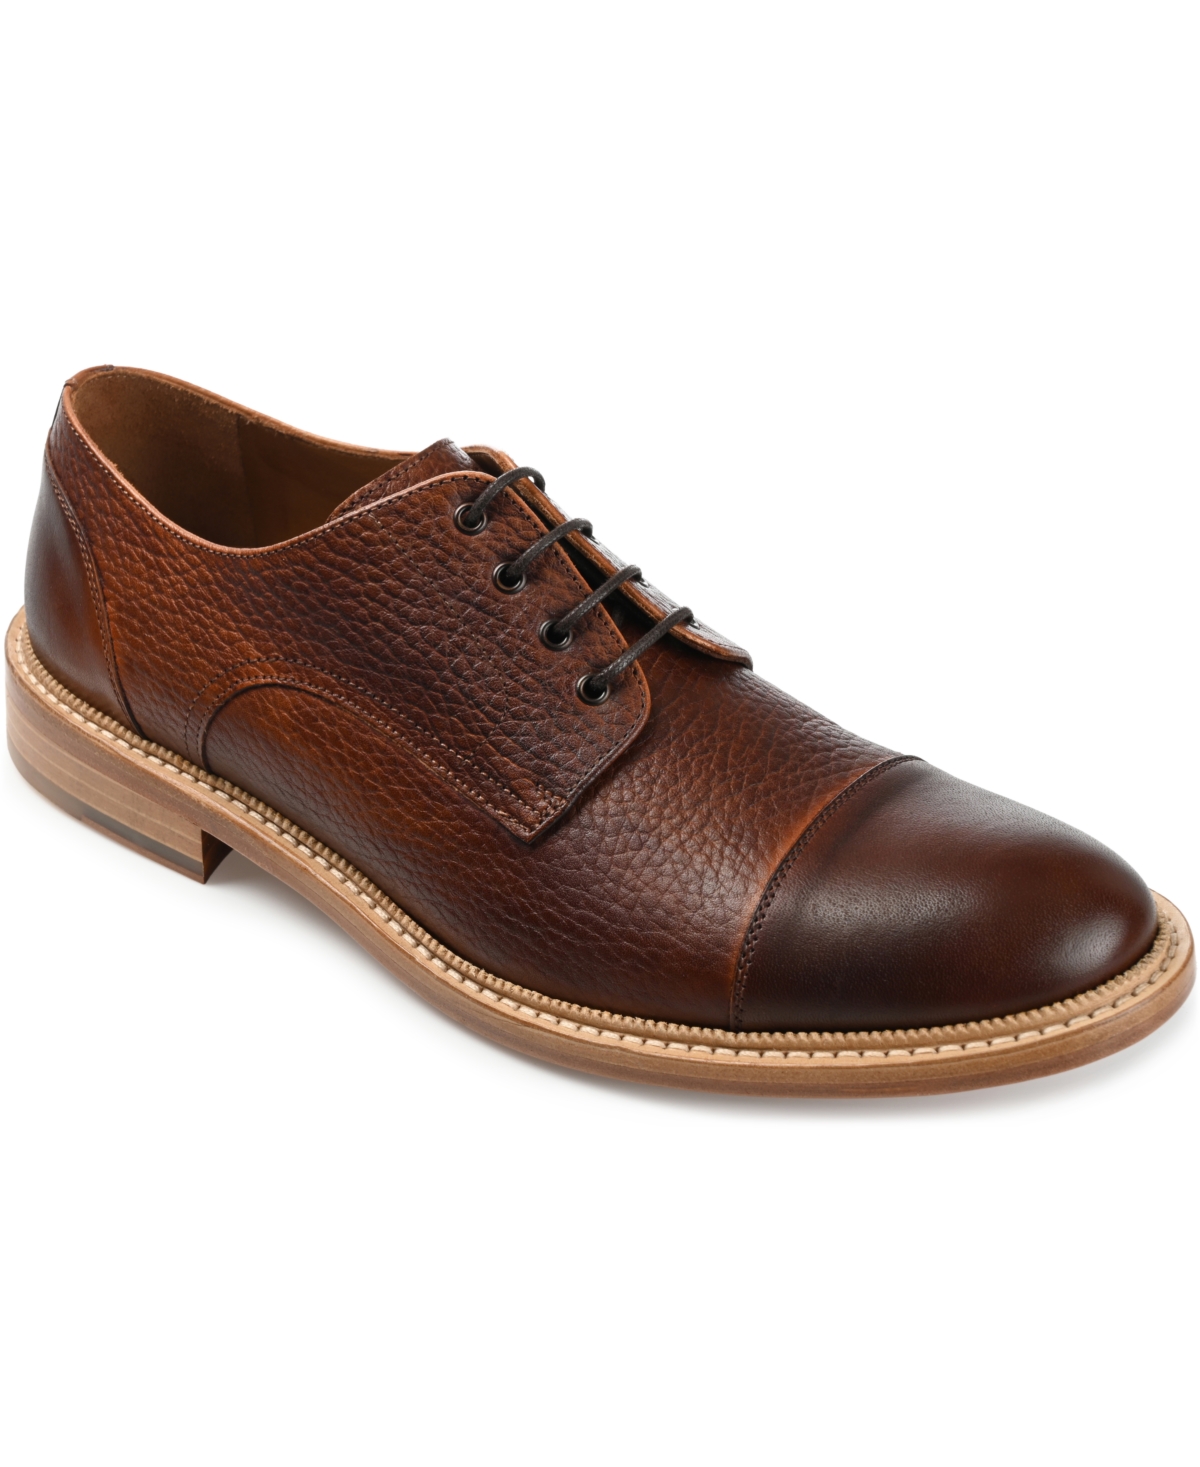 Men's Rome Full-Grain Leather Cap Toe Dress Shoes - Brown